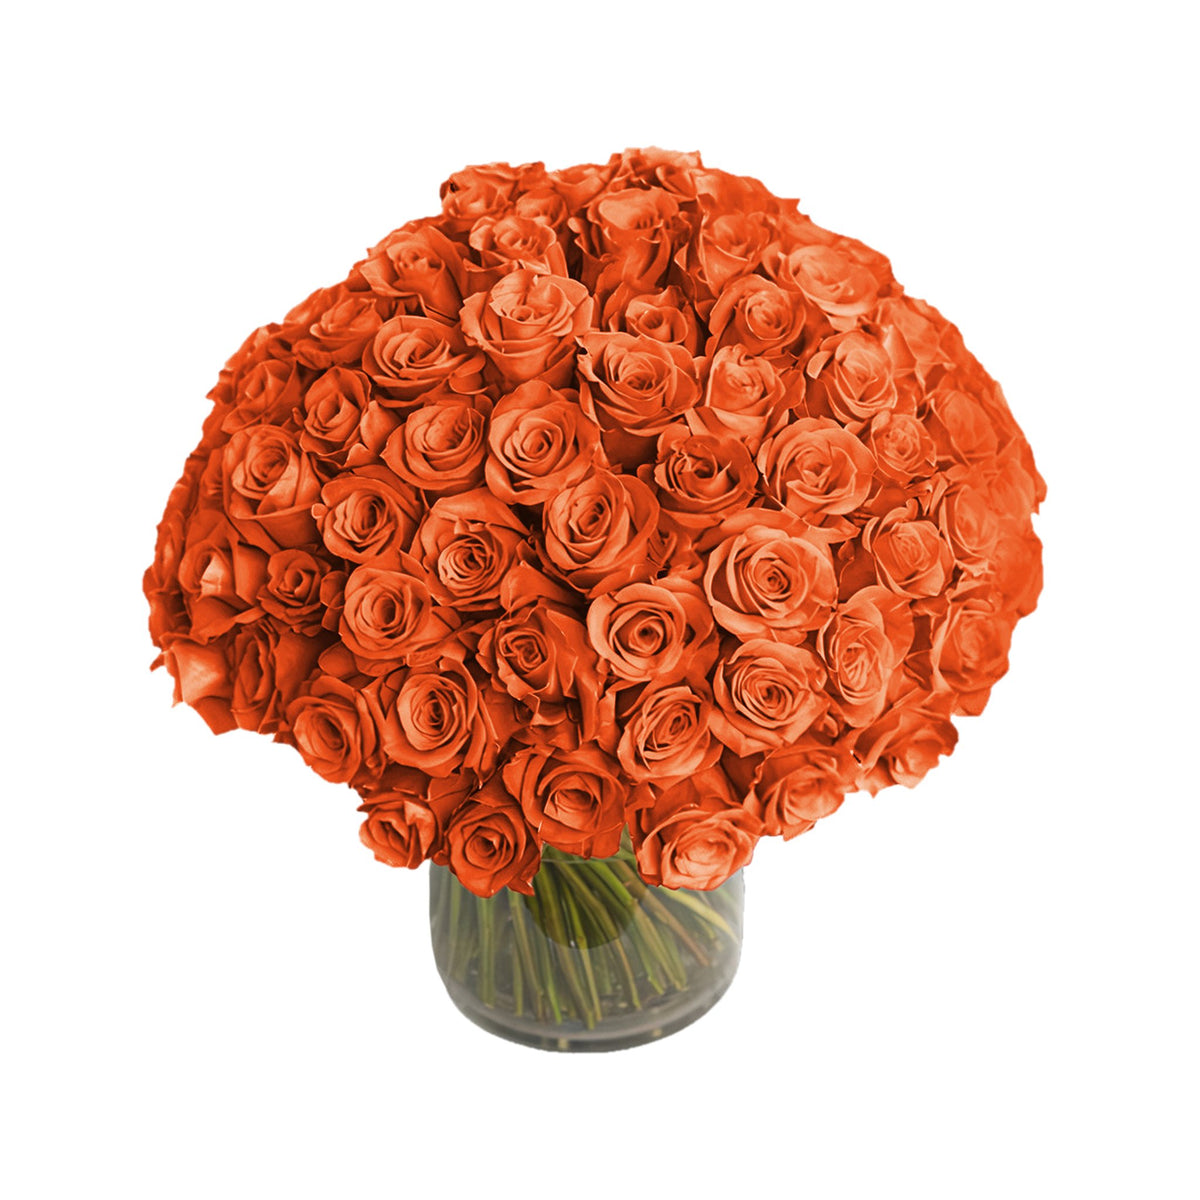 NYC Flower Delivery - Fresh Roses in a Crystal Vase | Orange - 100 Roses - Roses